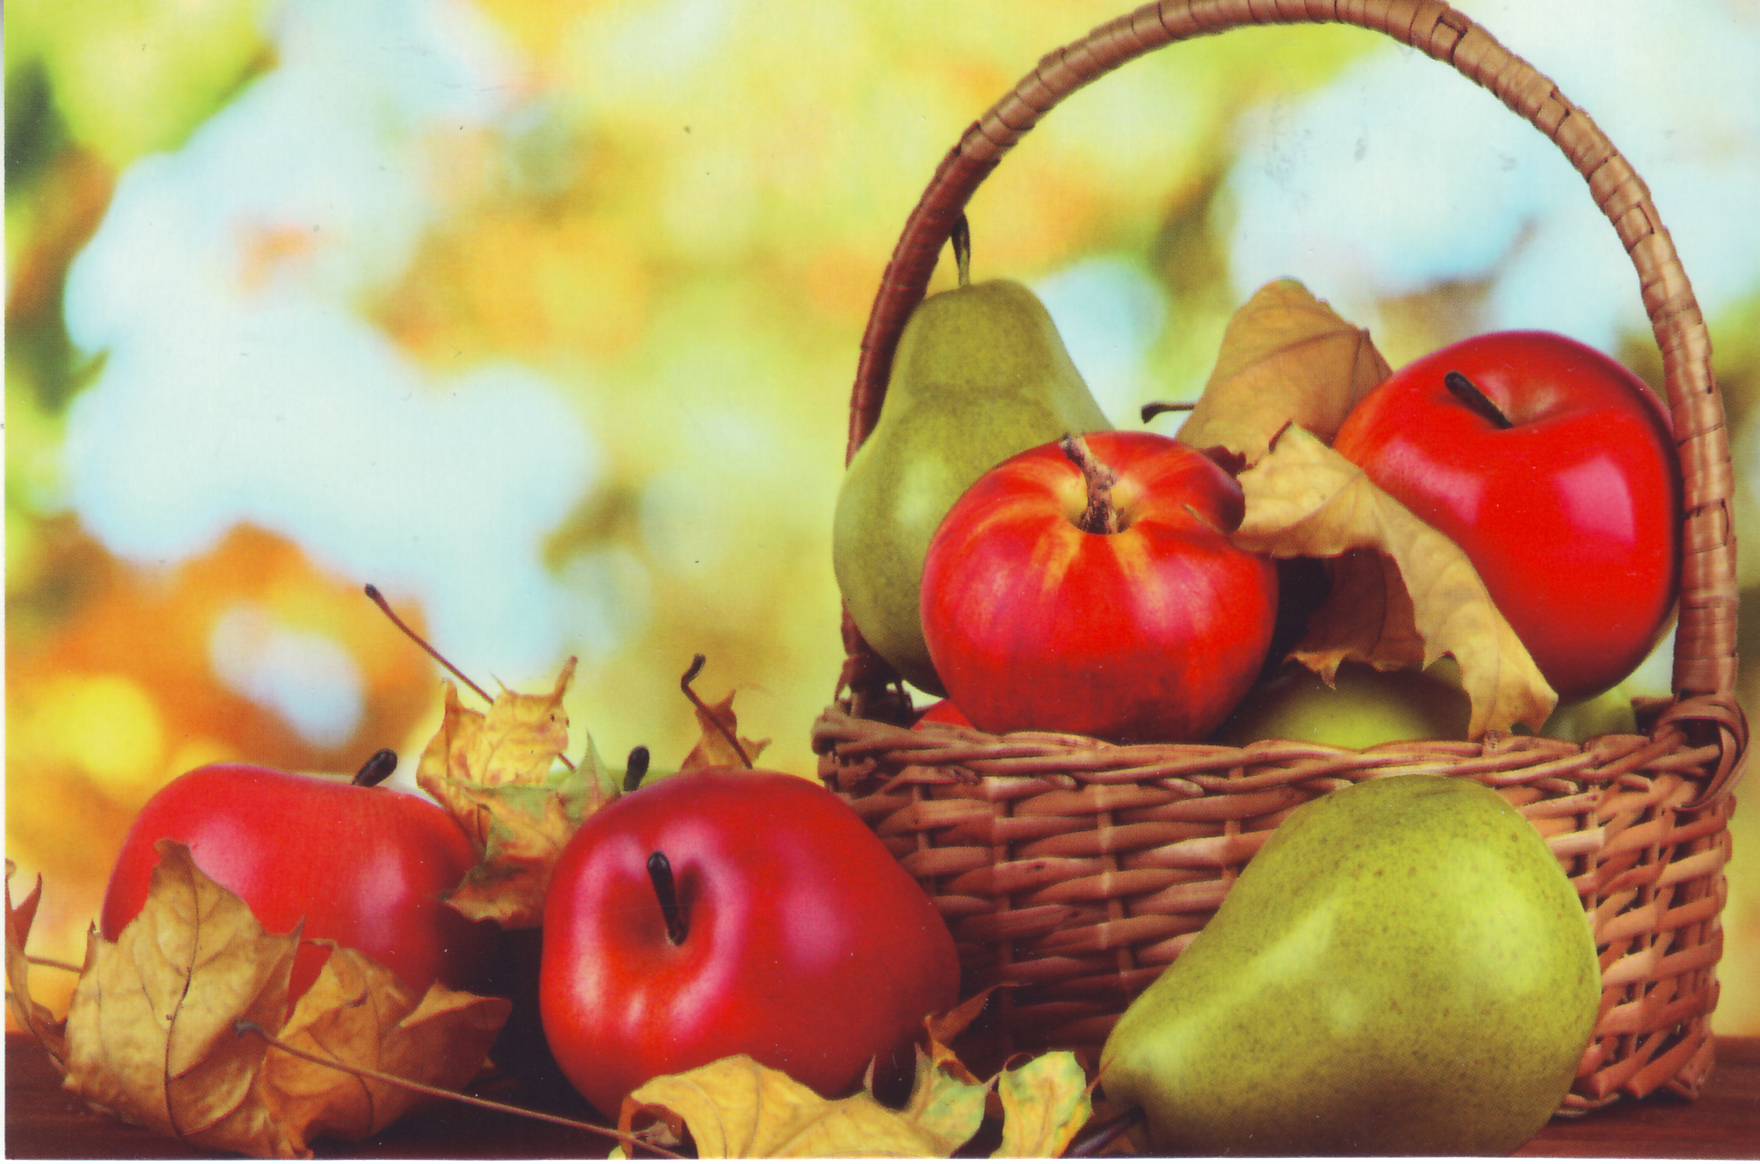 Яблоки и груши в корзине осень